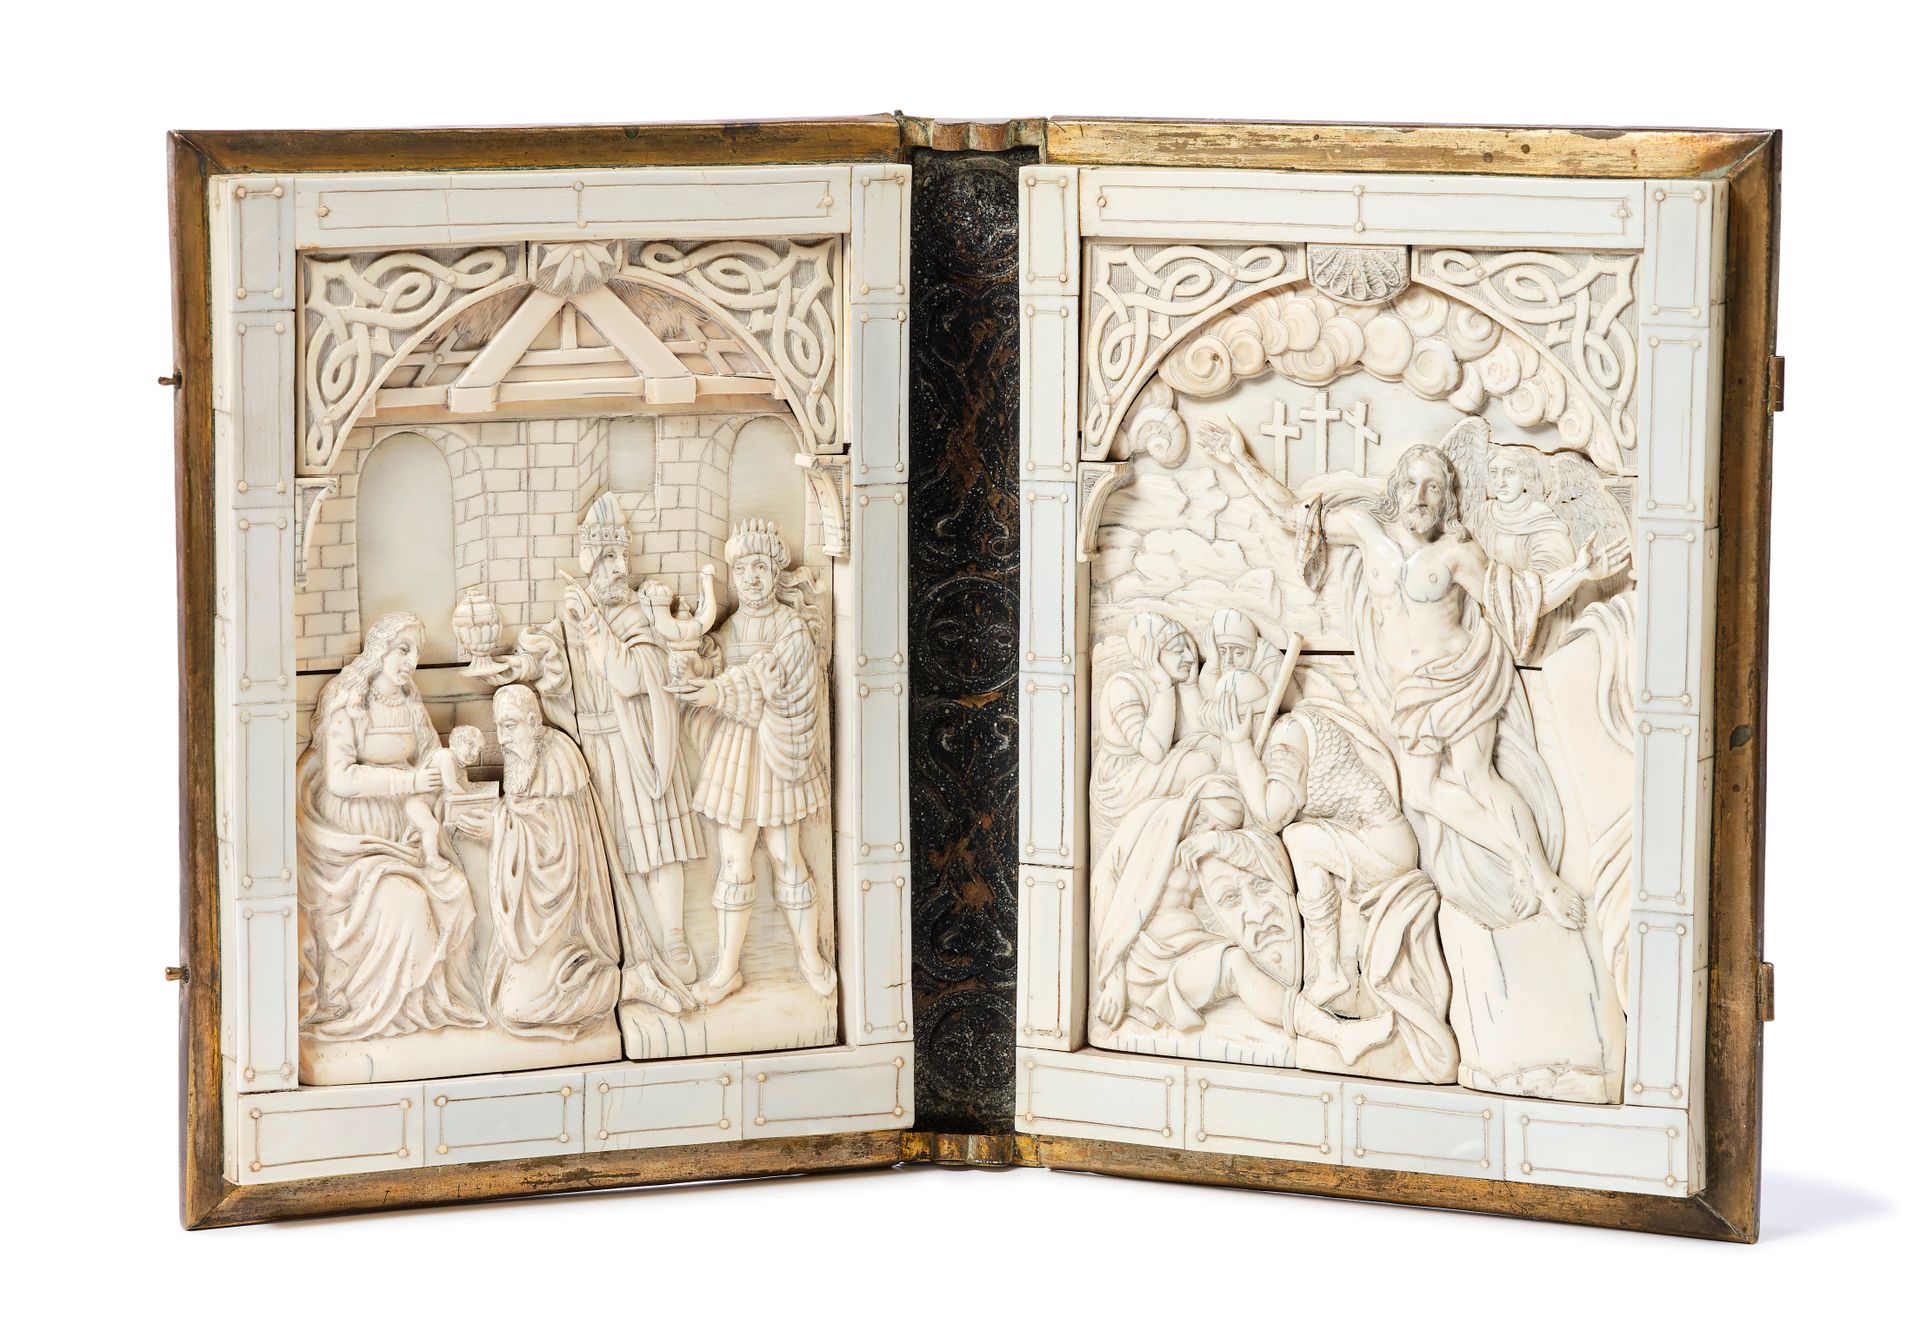 Null 象牙雕刻的双联画，展示了基督生活中的两个场景，麦琪的崇拜和复活。建筑框架带有拱形门廊，门廊上有交错的装饰。

法国，19世纪

闭合：高29.5；宽2&hellip;